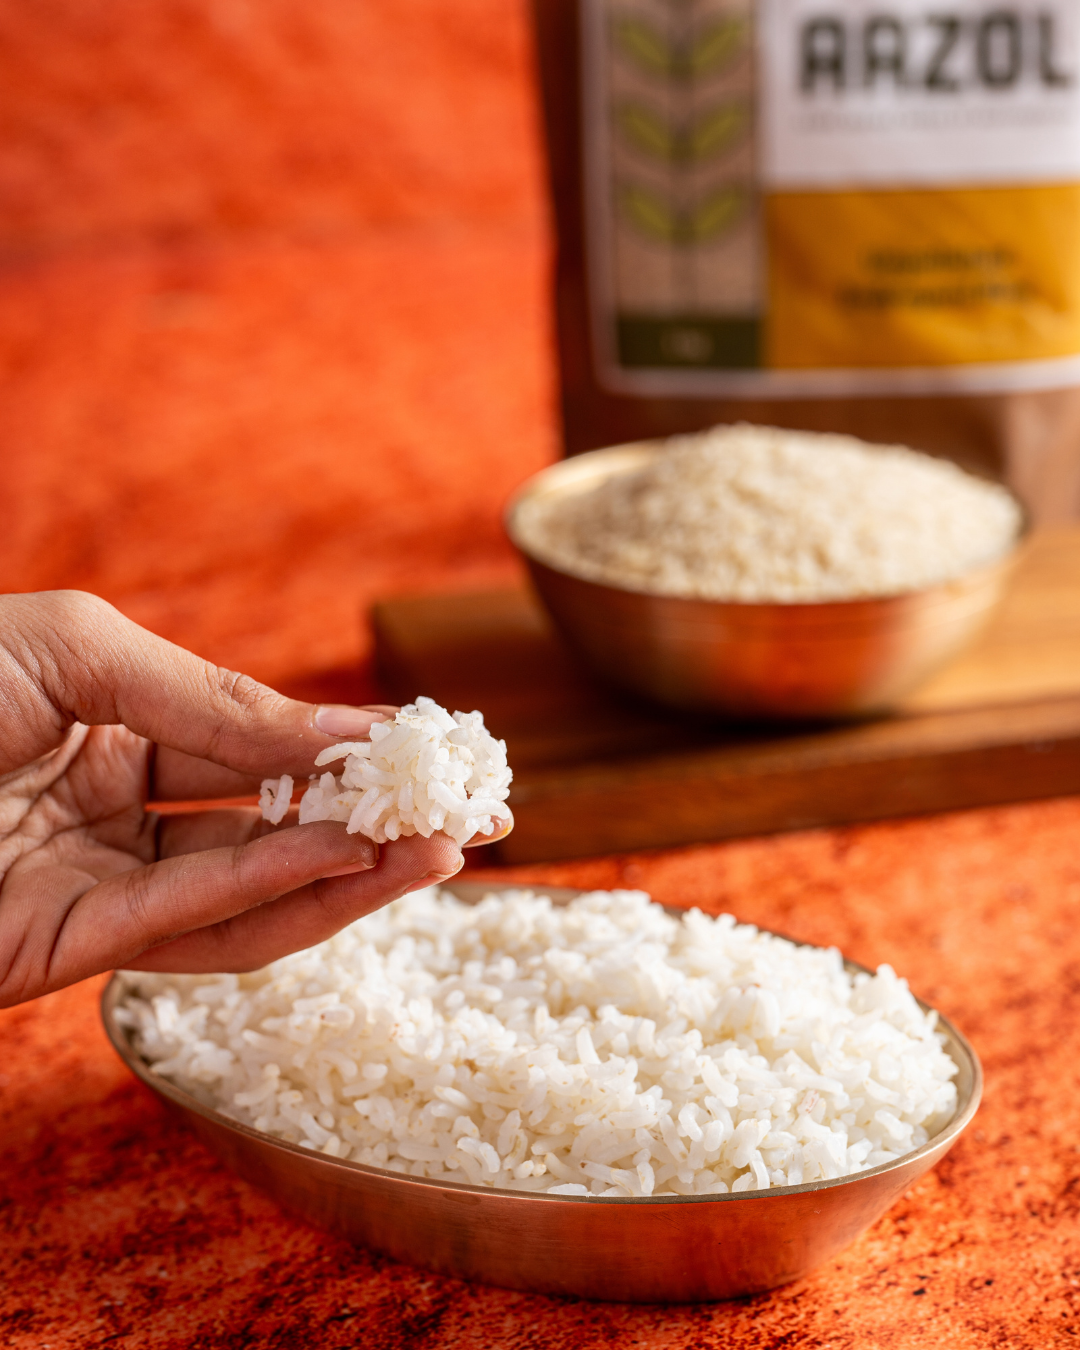 Unpolished Indrayani Rice: Aromatic Sticky Rice (1kg/5kg)